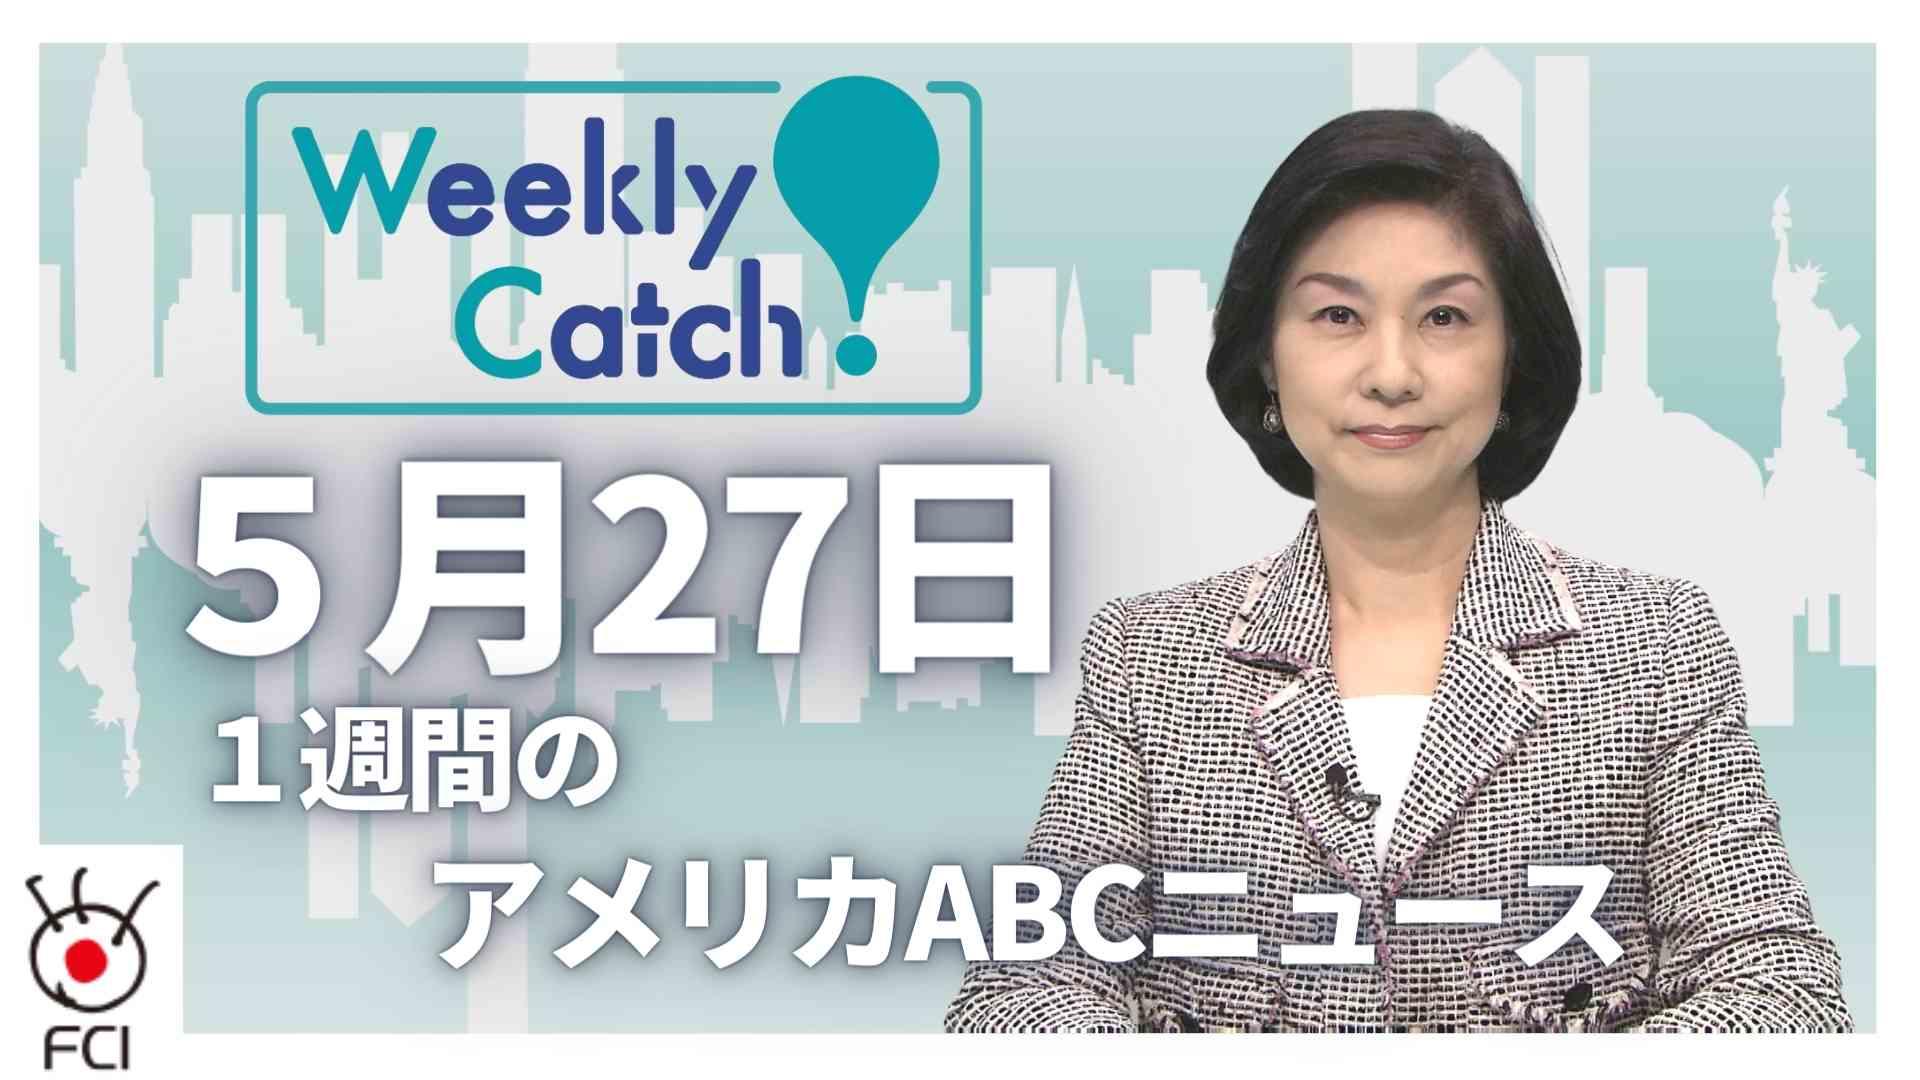 5月27日 Weekly Catch!